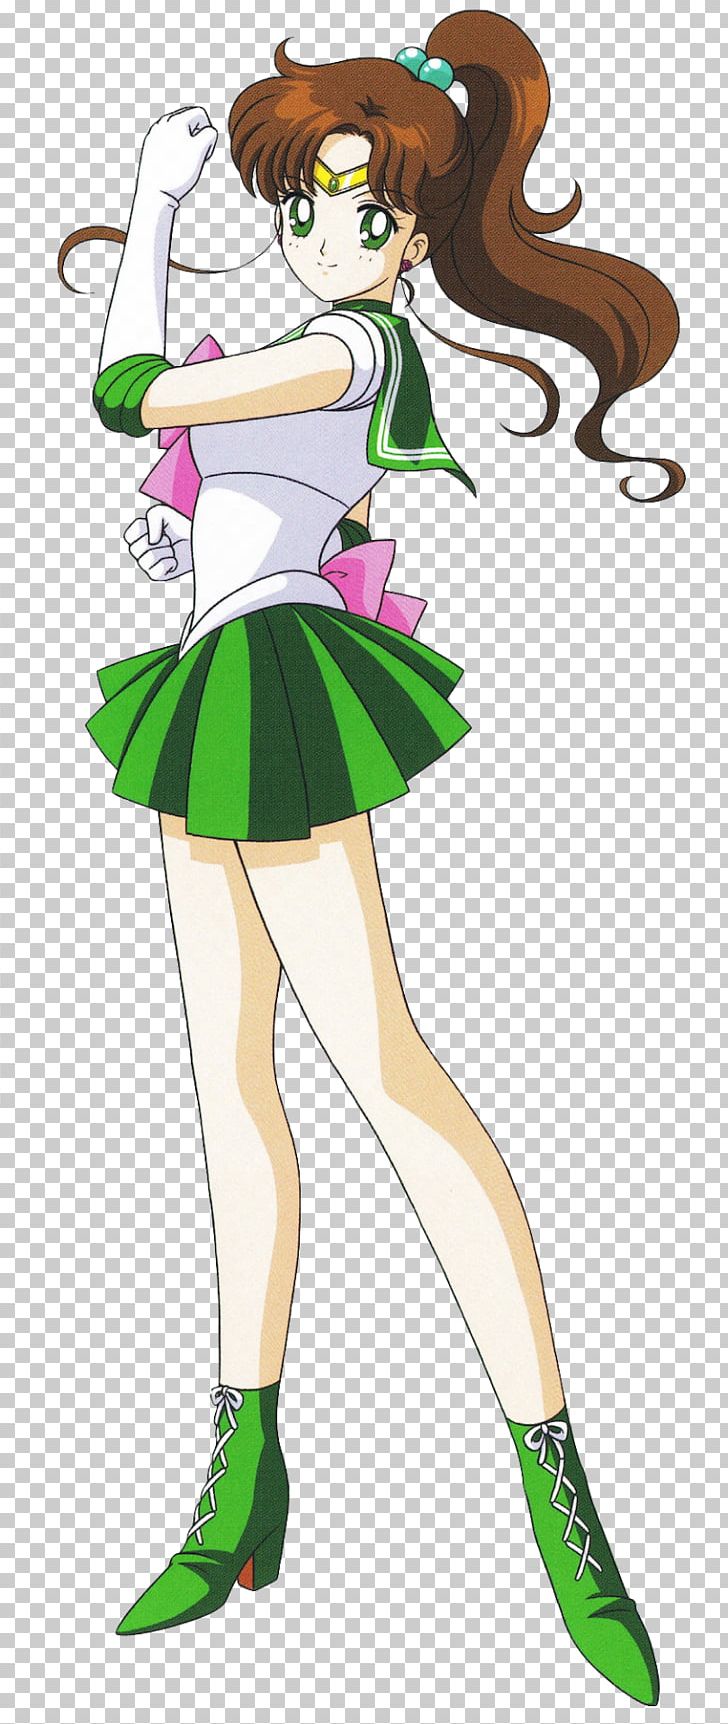 Sailor Jupiter Sailor Moon Sailor Mercury Sailor Mars Sailor Venus PNG, Clipart, Art, Cartoon, Clothing, Cost, Costume Design Free PNG Download